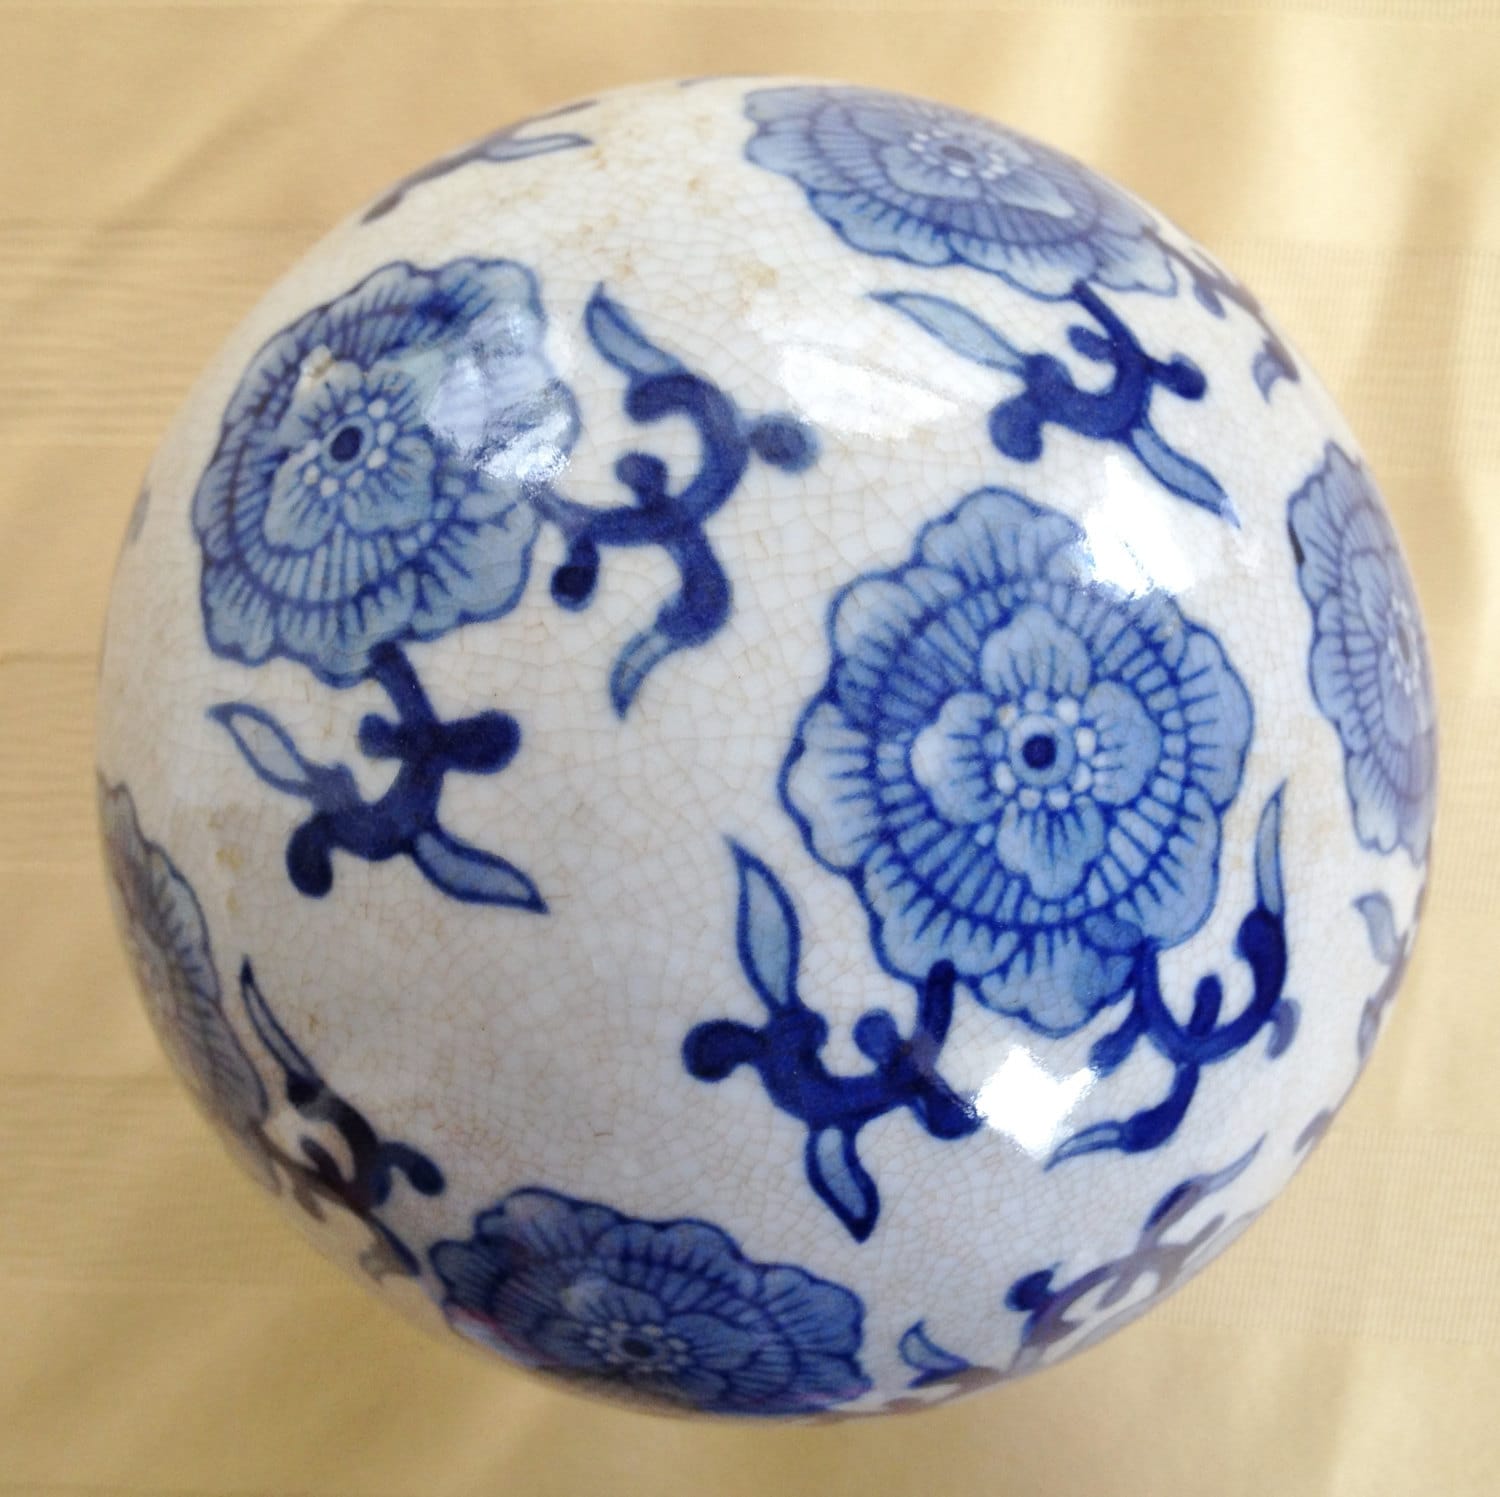 Vintage Blue and White Ceramic Ball